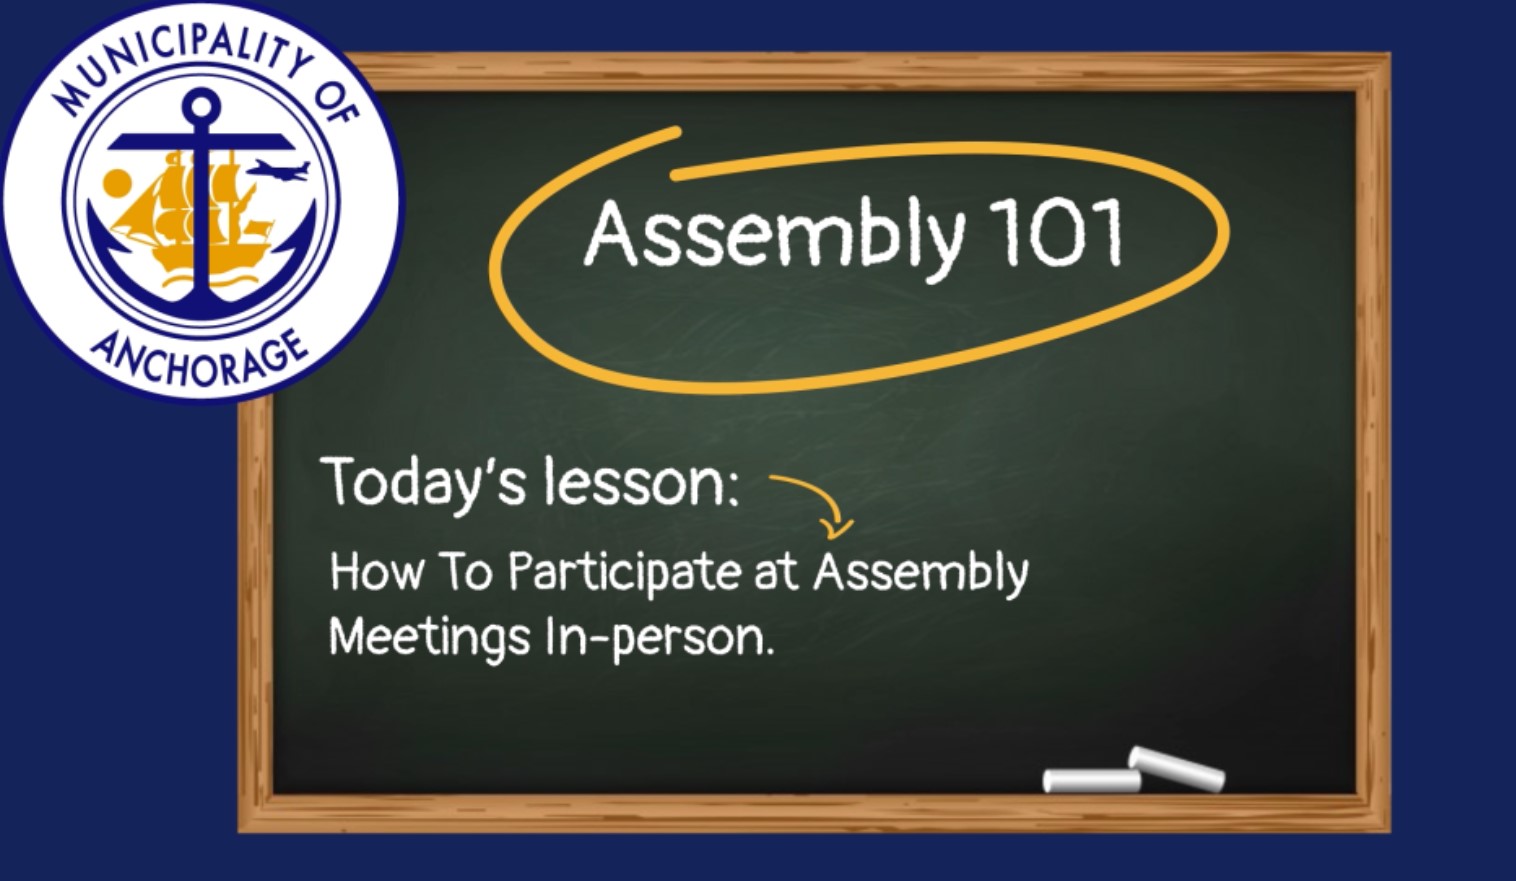 Assembly 101 Image.jpg